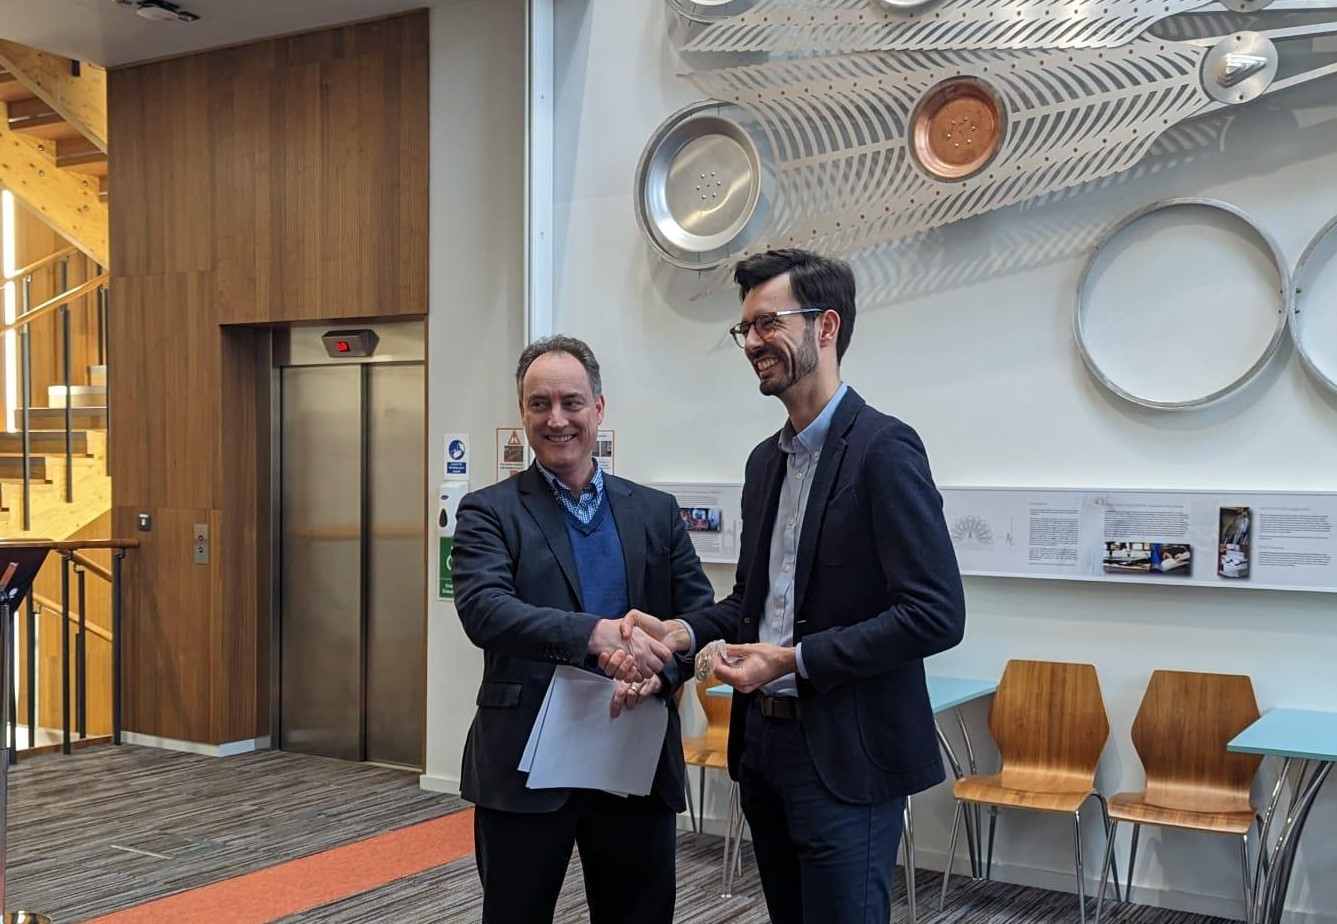 Our Cleantech Analyst Antoine Koen wins award from Cambridge University’s Engineering Department